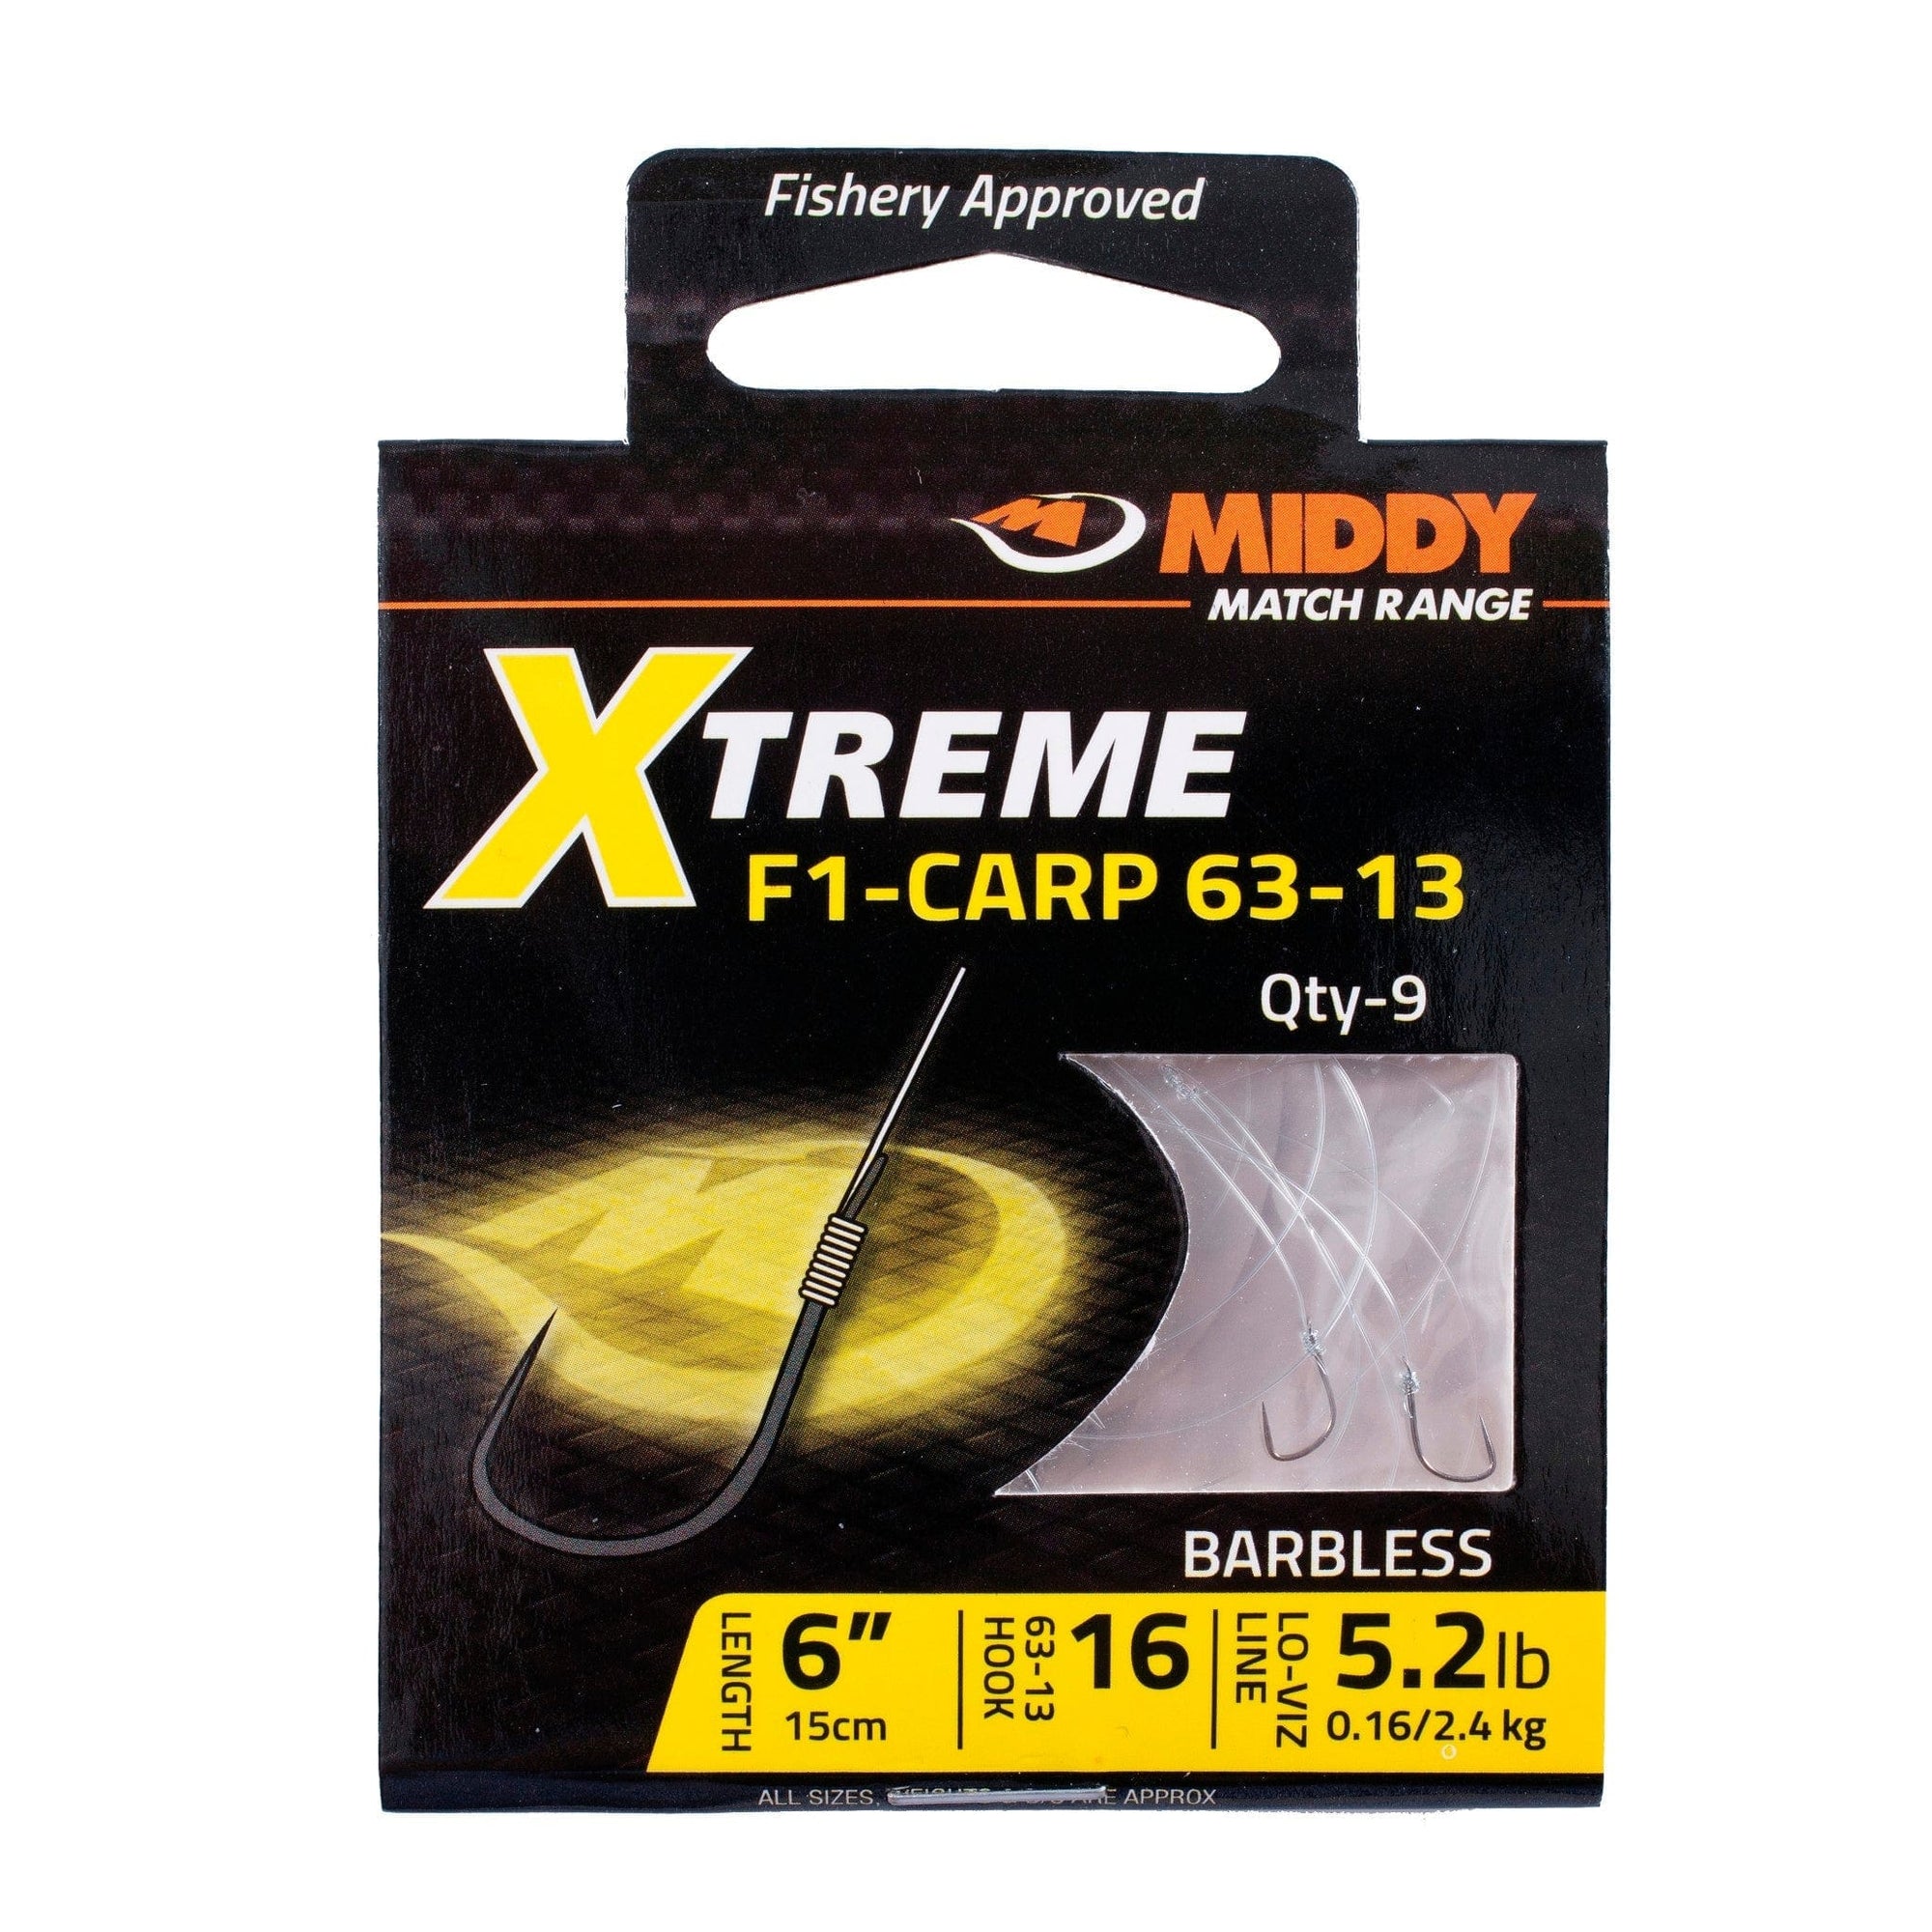 MIDDY Xtreme F1 Carp 63-13 Barbless Hooks-to-Nylon (9pc pkt).